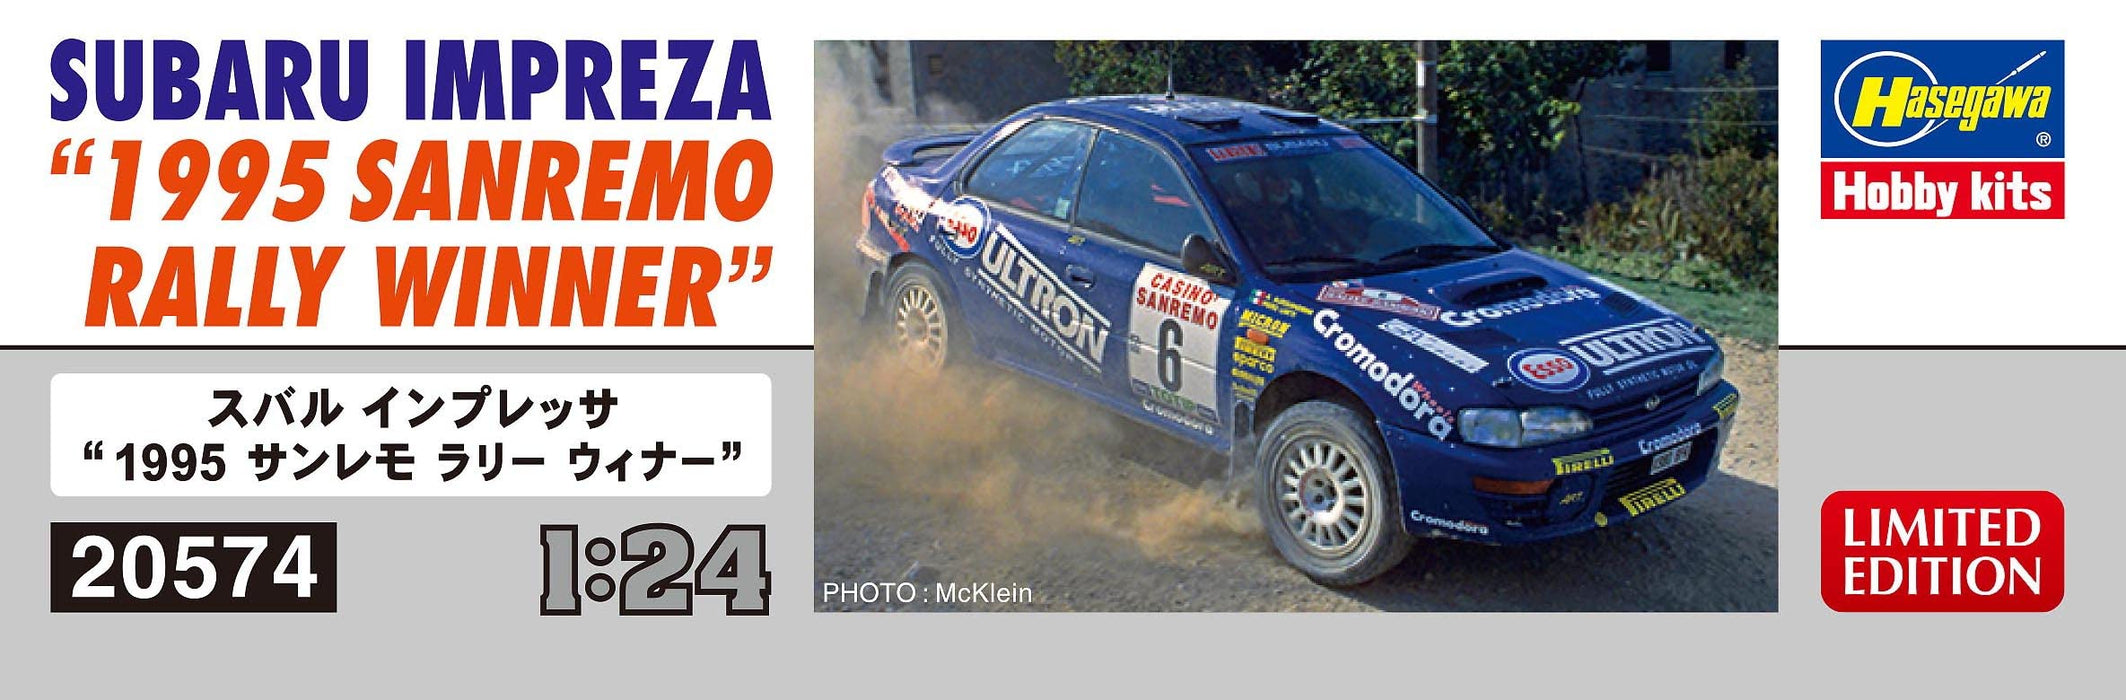 HASEGAWA 1/24 Subaru Impreza 1995 Sanremo Rally Winner Plastic Model